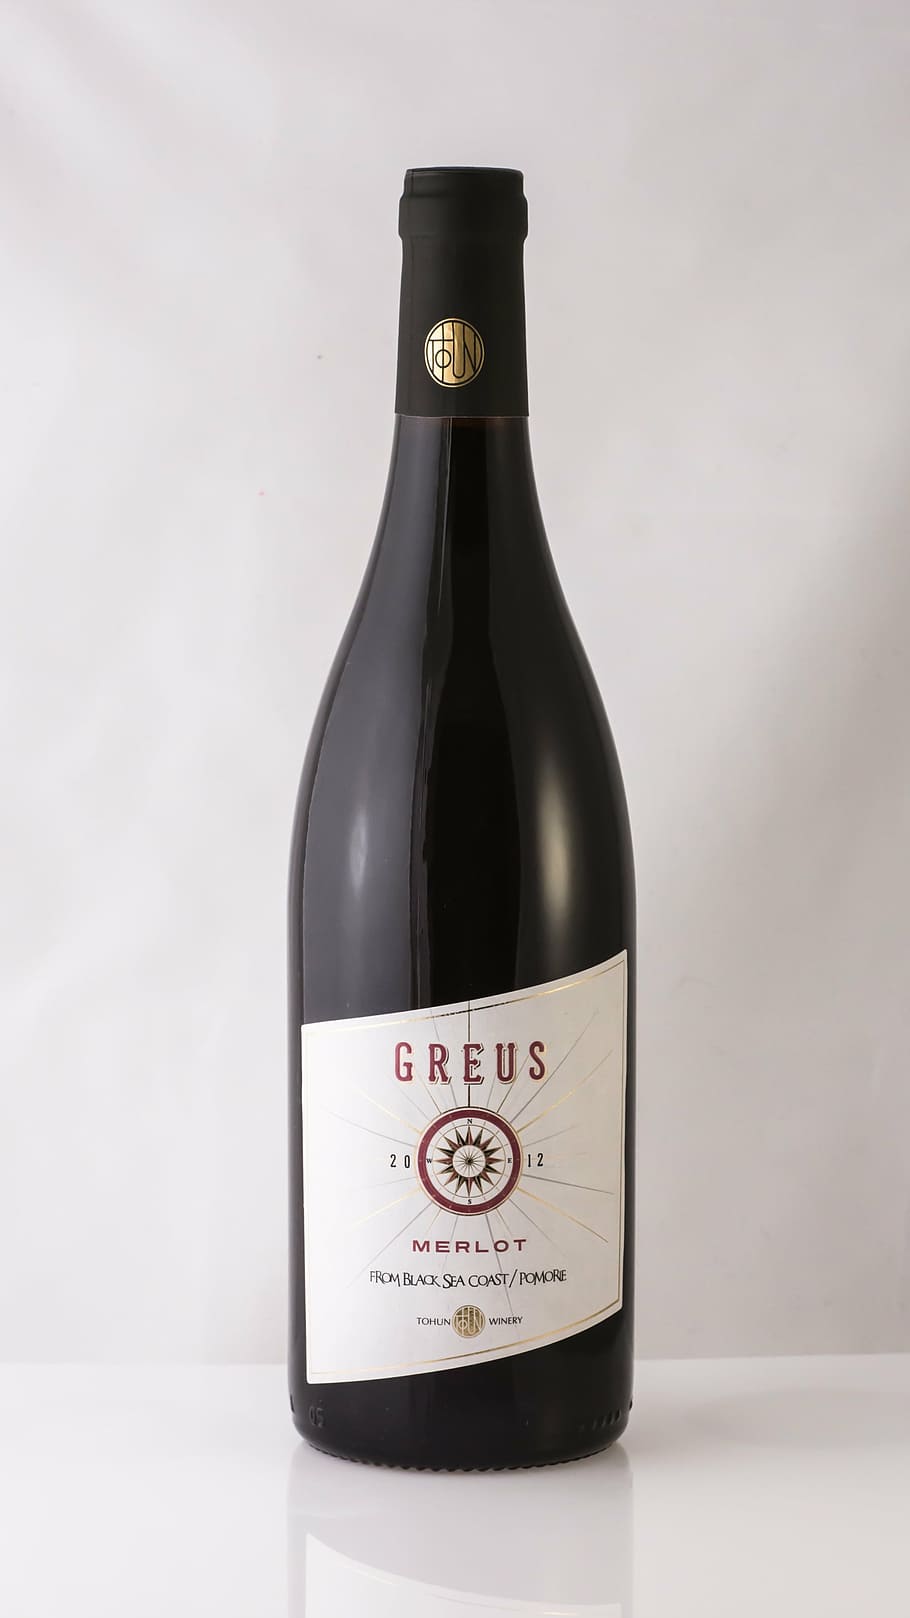 grues merlot bottle, wine, wine production, bottle, production, alcohol, drink, winery, vine, barrel